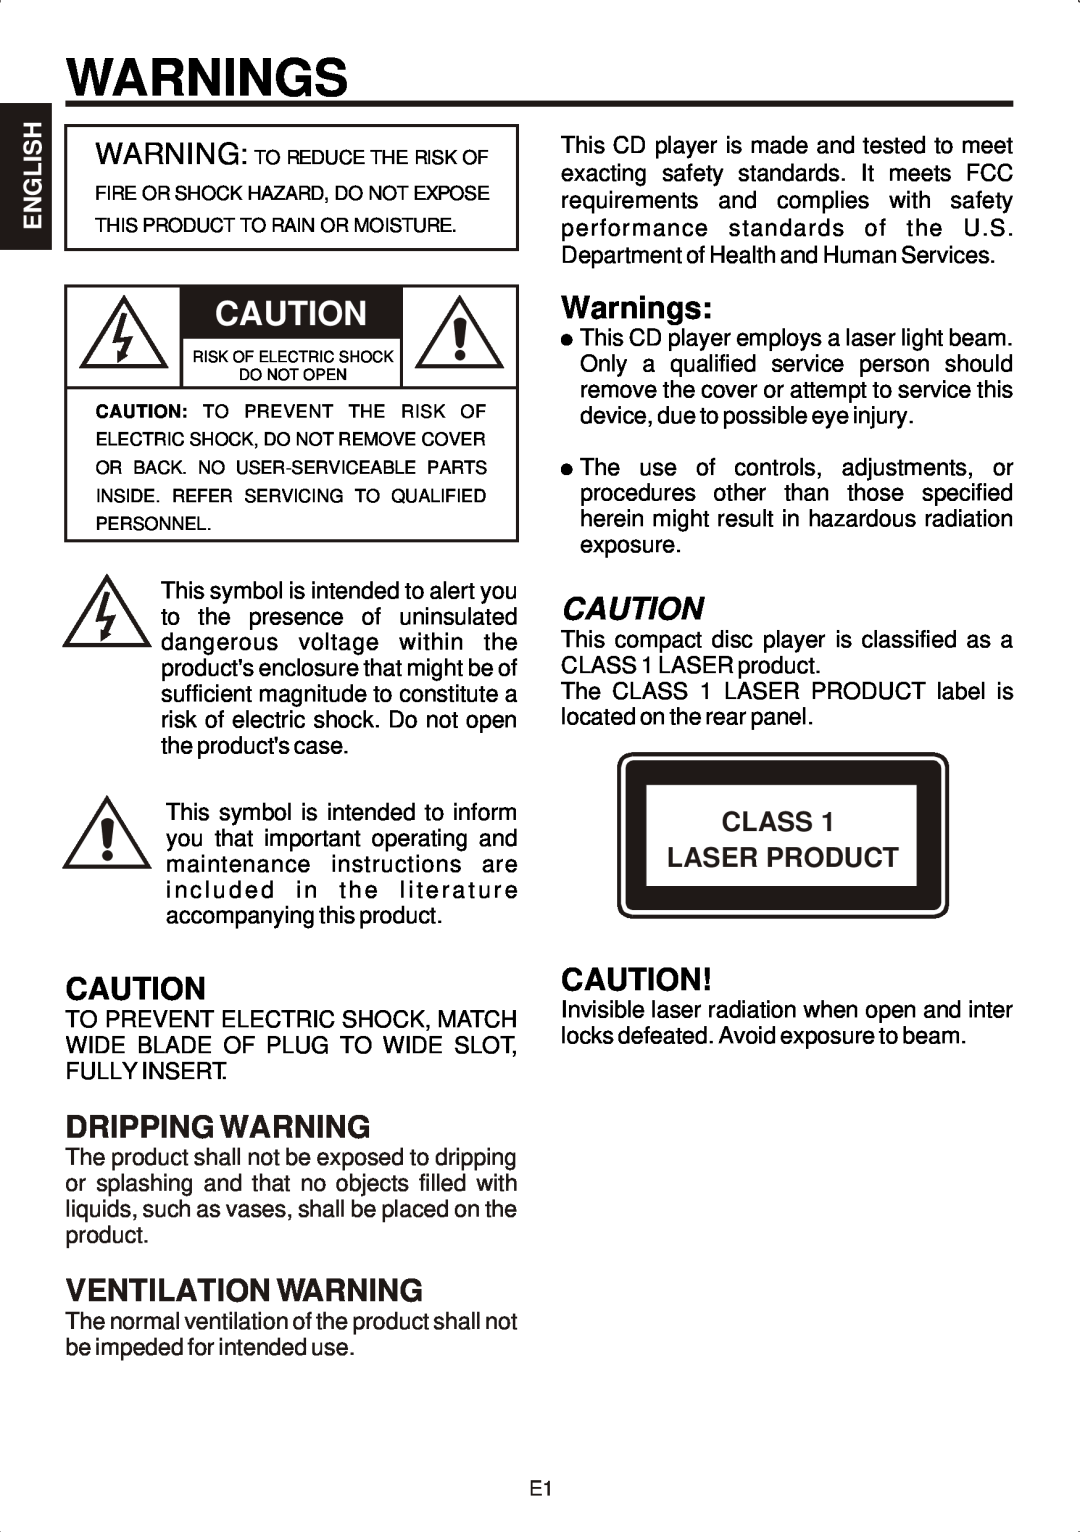 The Singing Machine SMG-301 manual Warnings, Dripping Warning, Ventilation Warning, English, Class Laser Product 